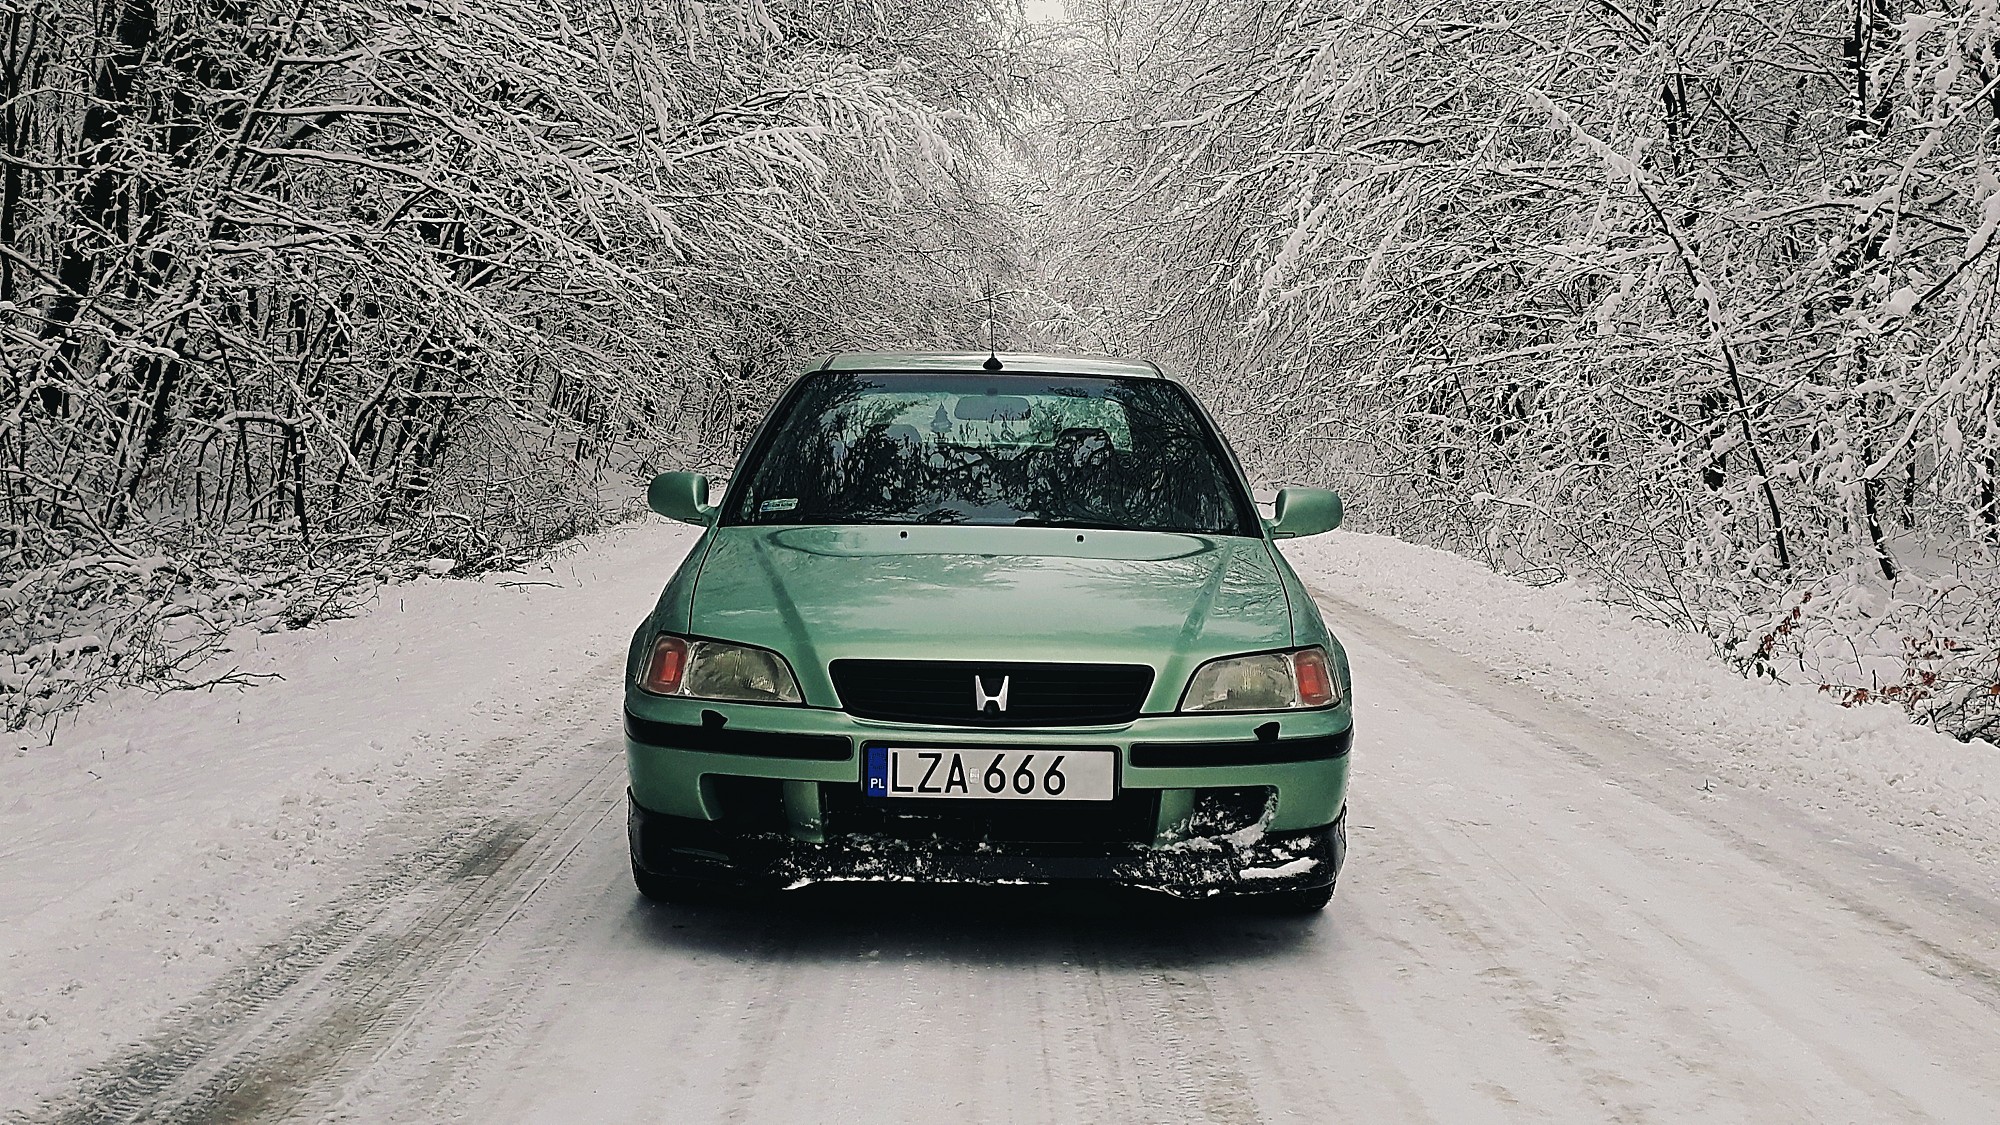 Honda Civic, Winter, Snow Wallpaper